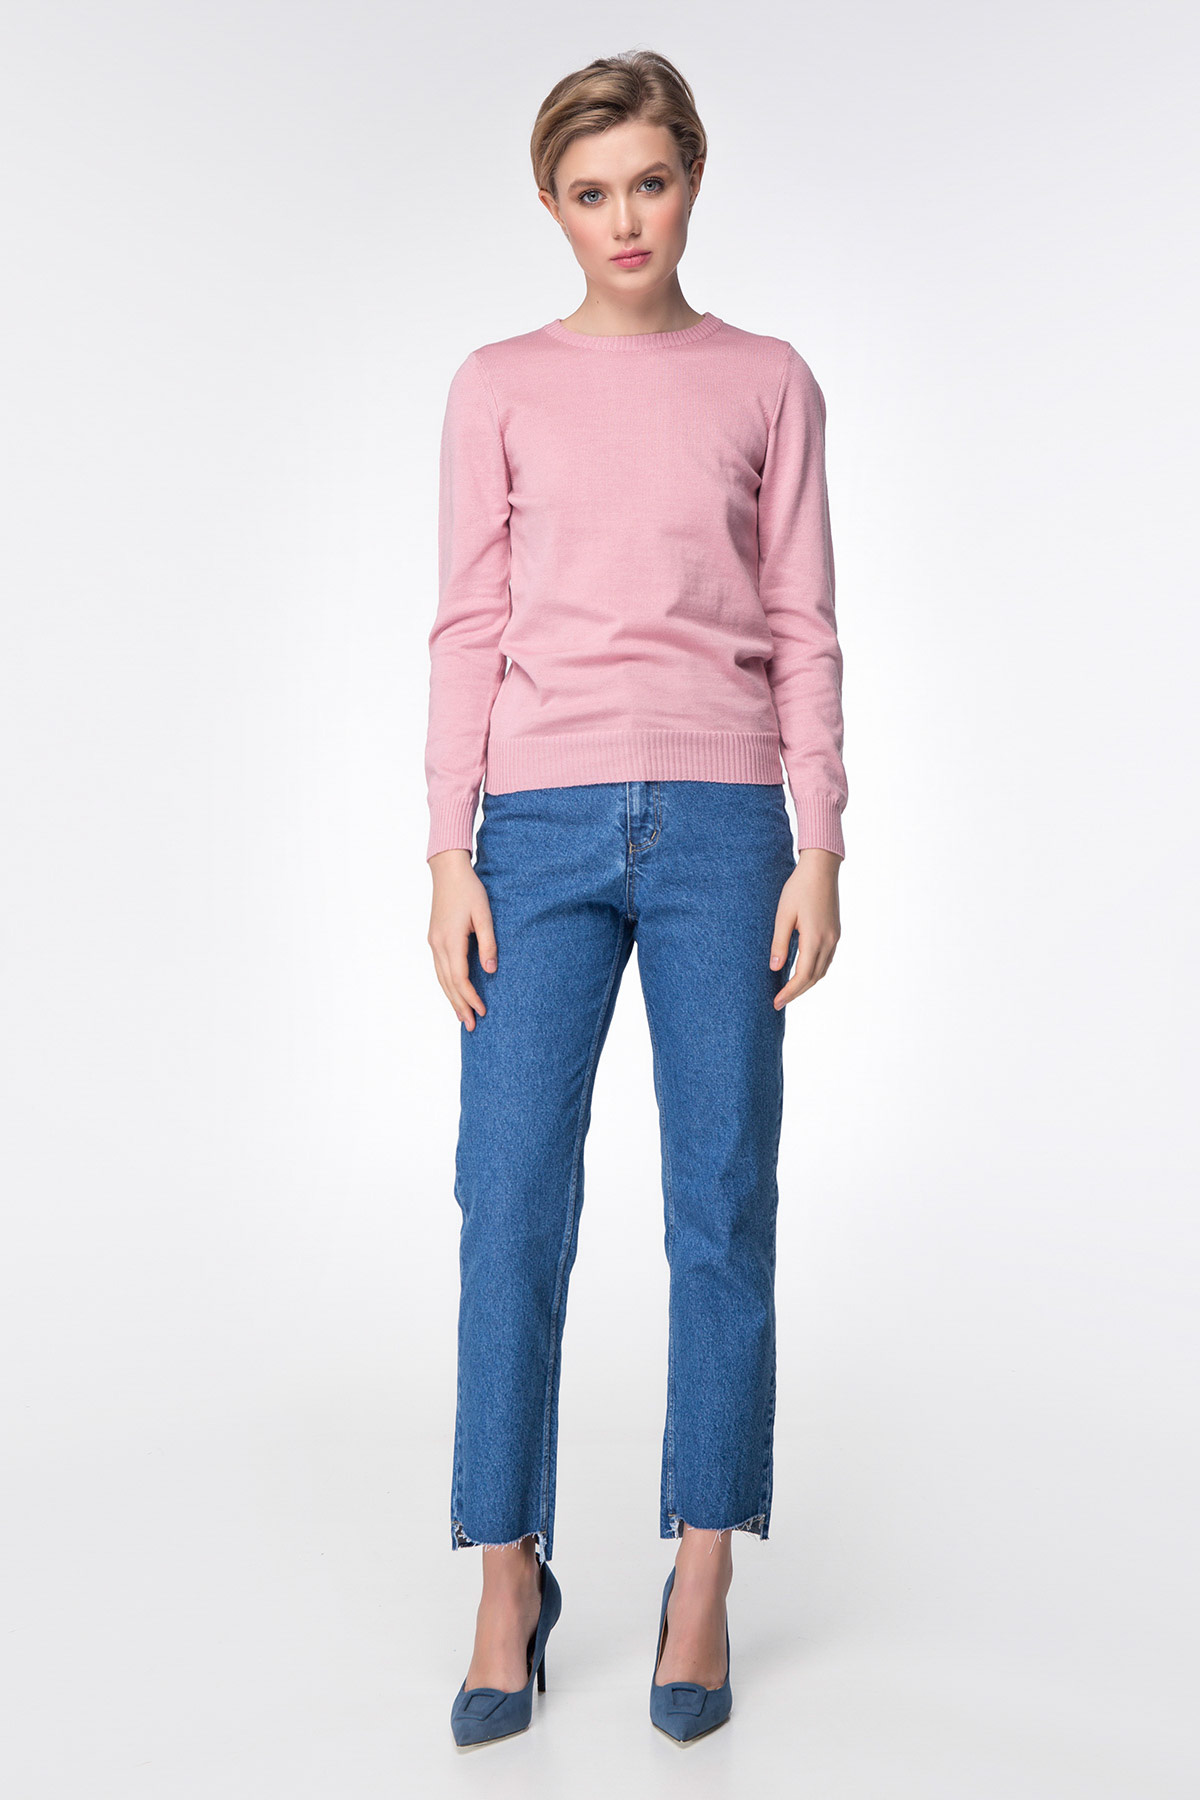 Pink knit jumper, photo 1